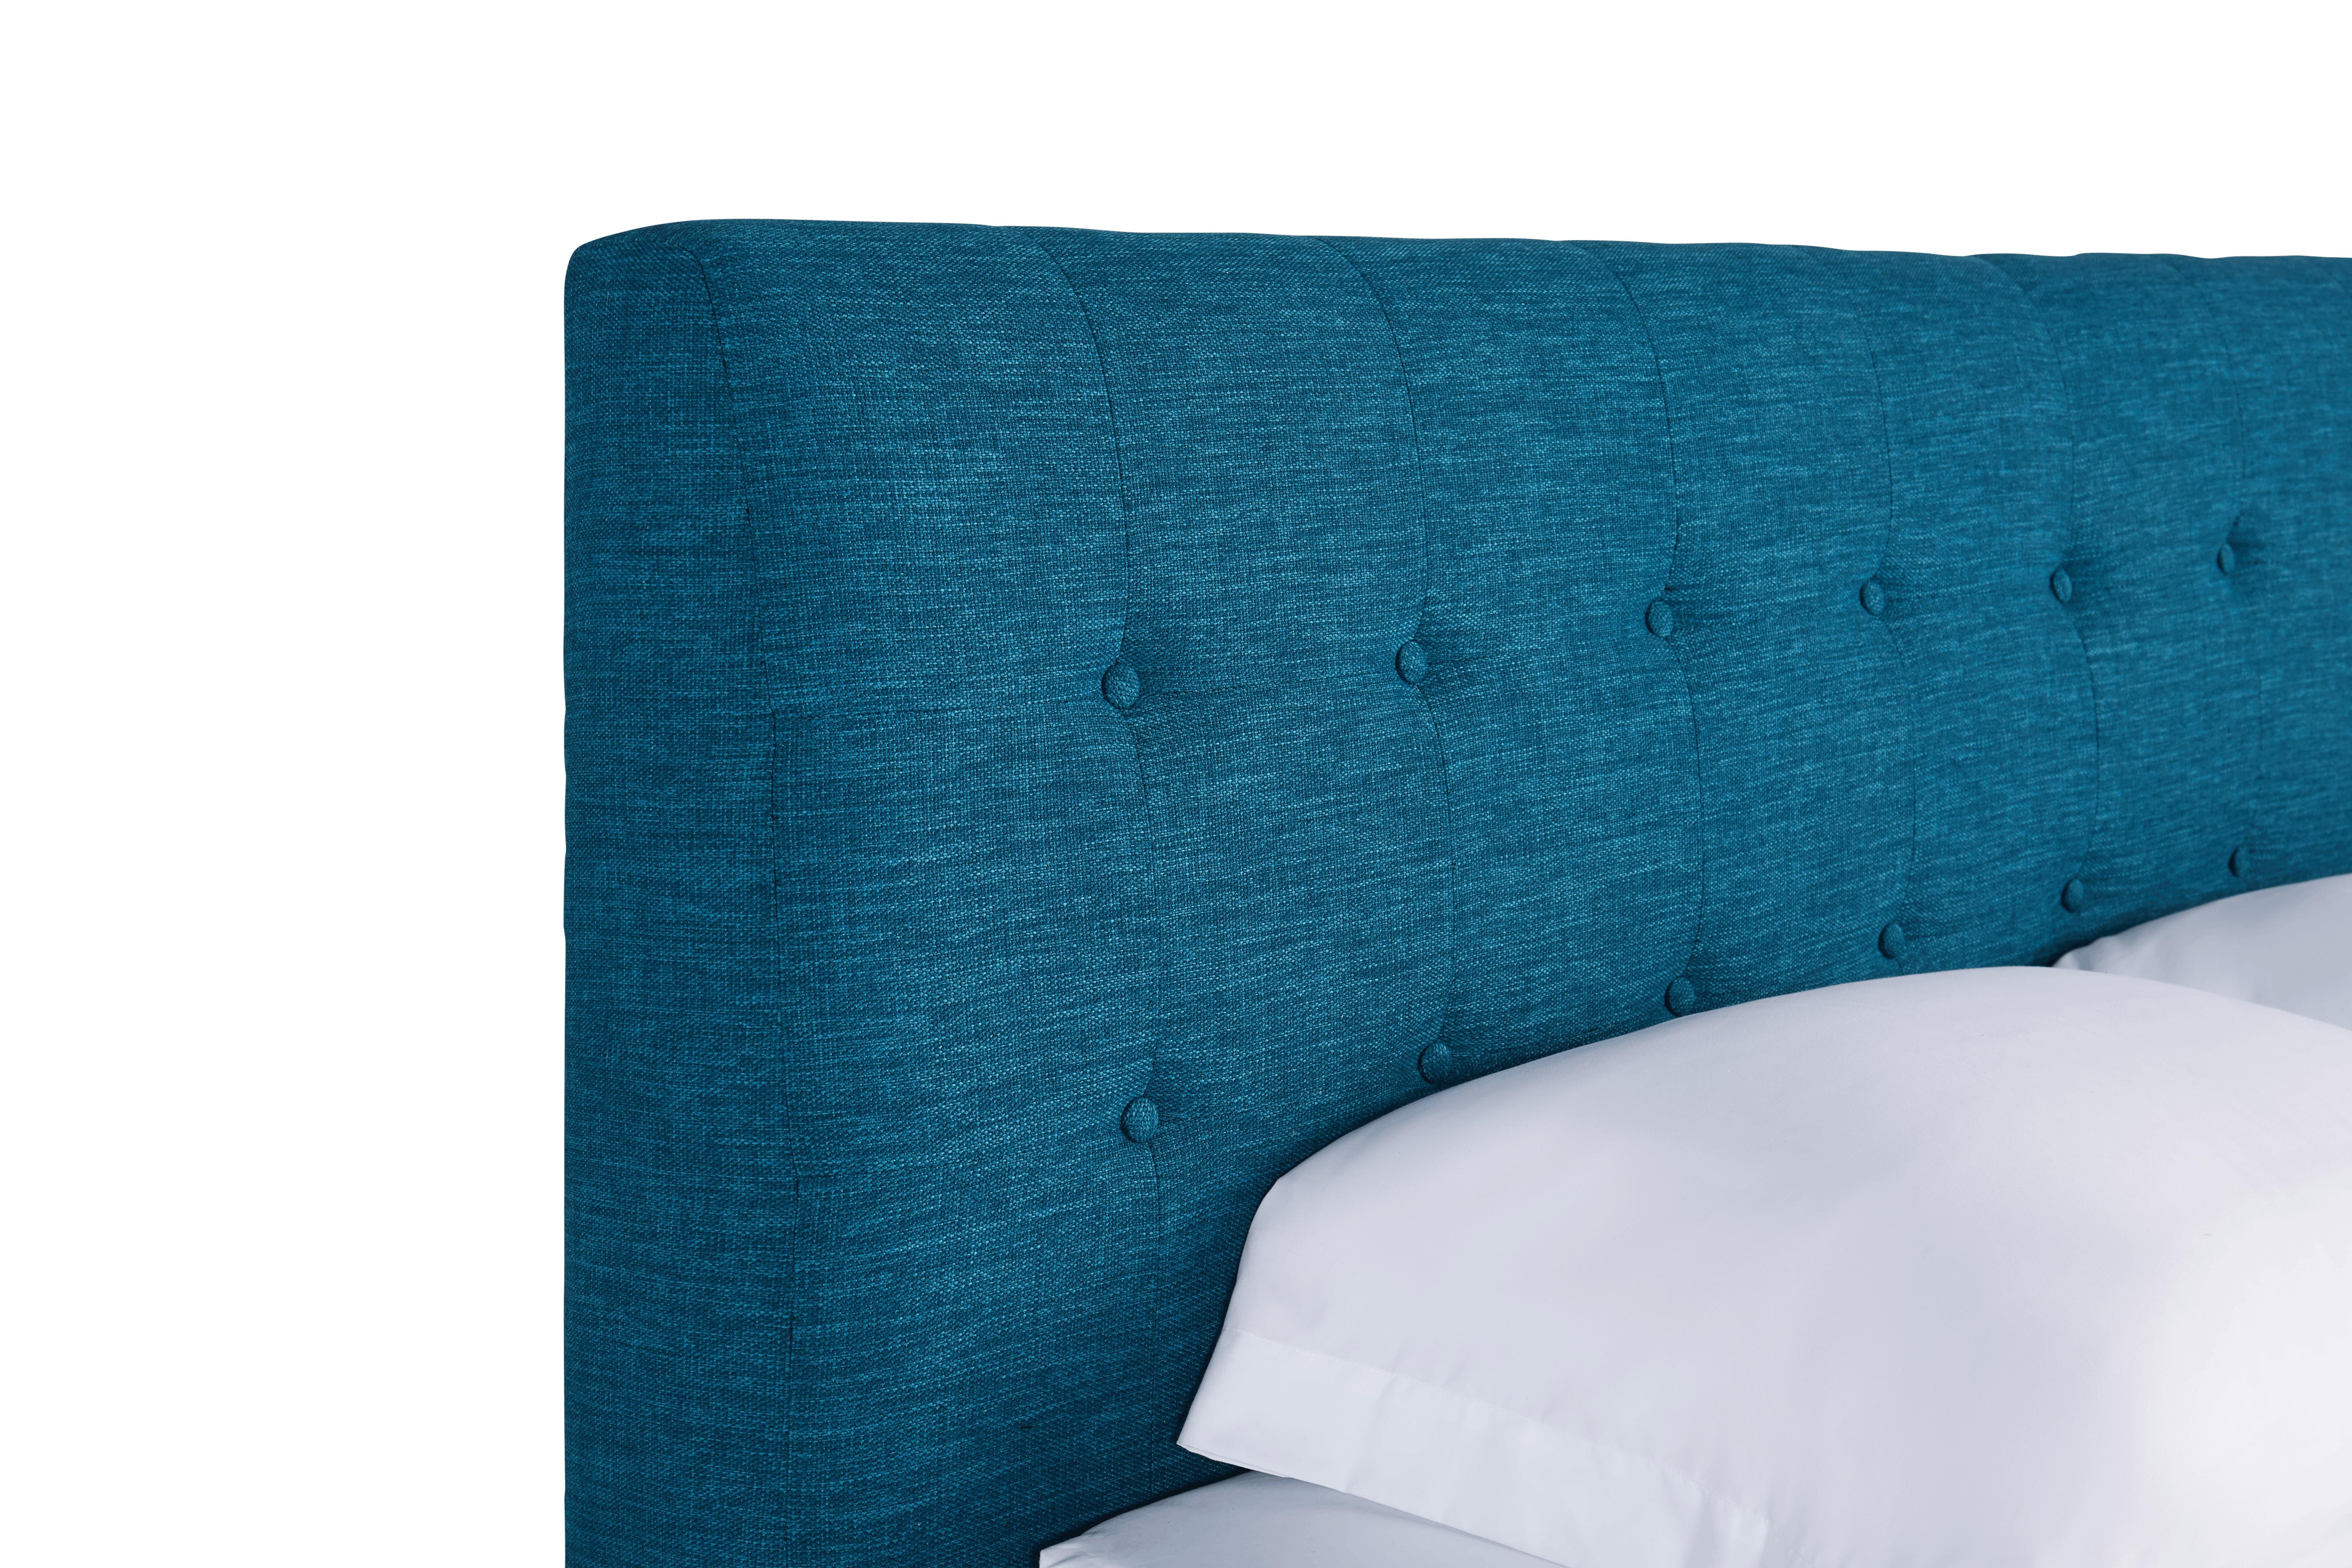 Blue Eliot Mid Century Modern Bed - Key Largo Zenith Teal - Mocha - Cal King - Image 4